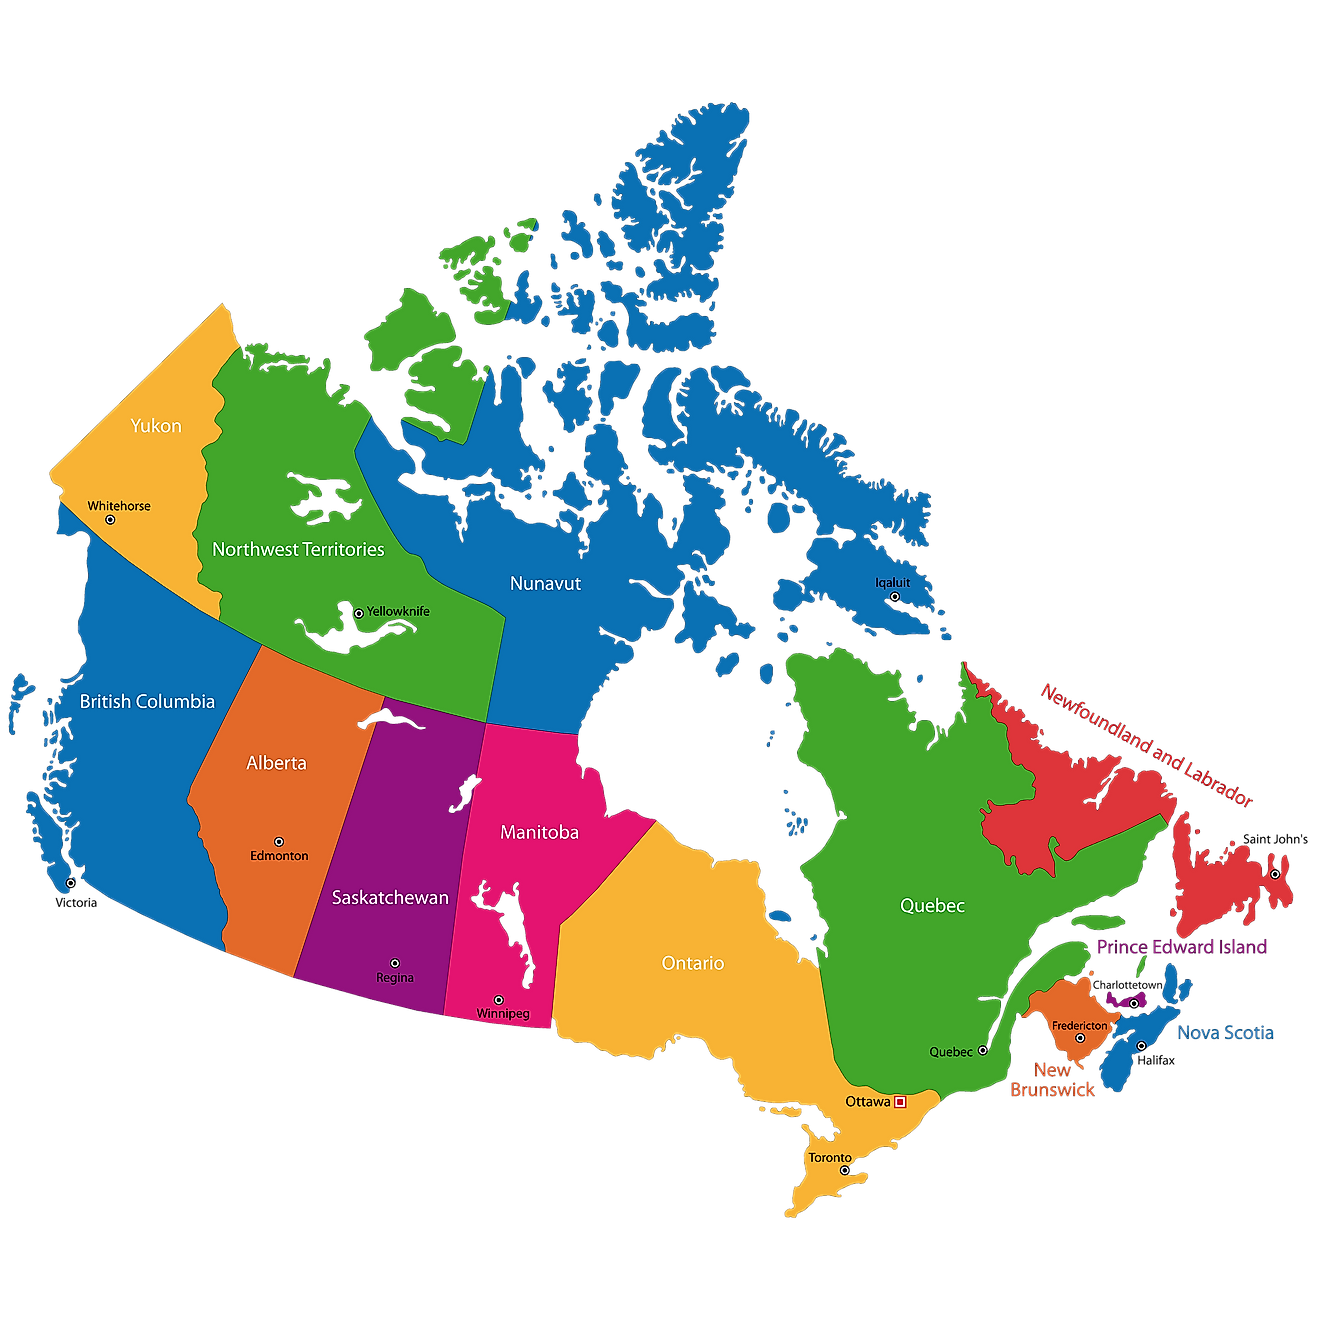 Capital Cities Of Canada's Provinces/Territories